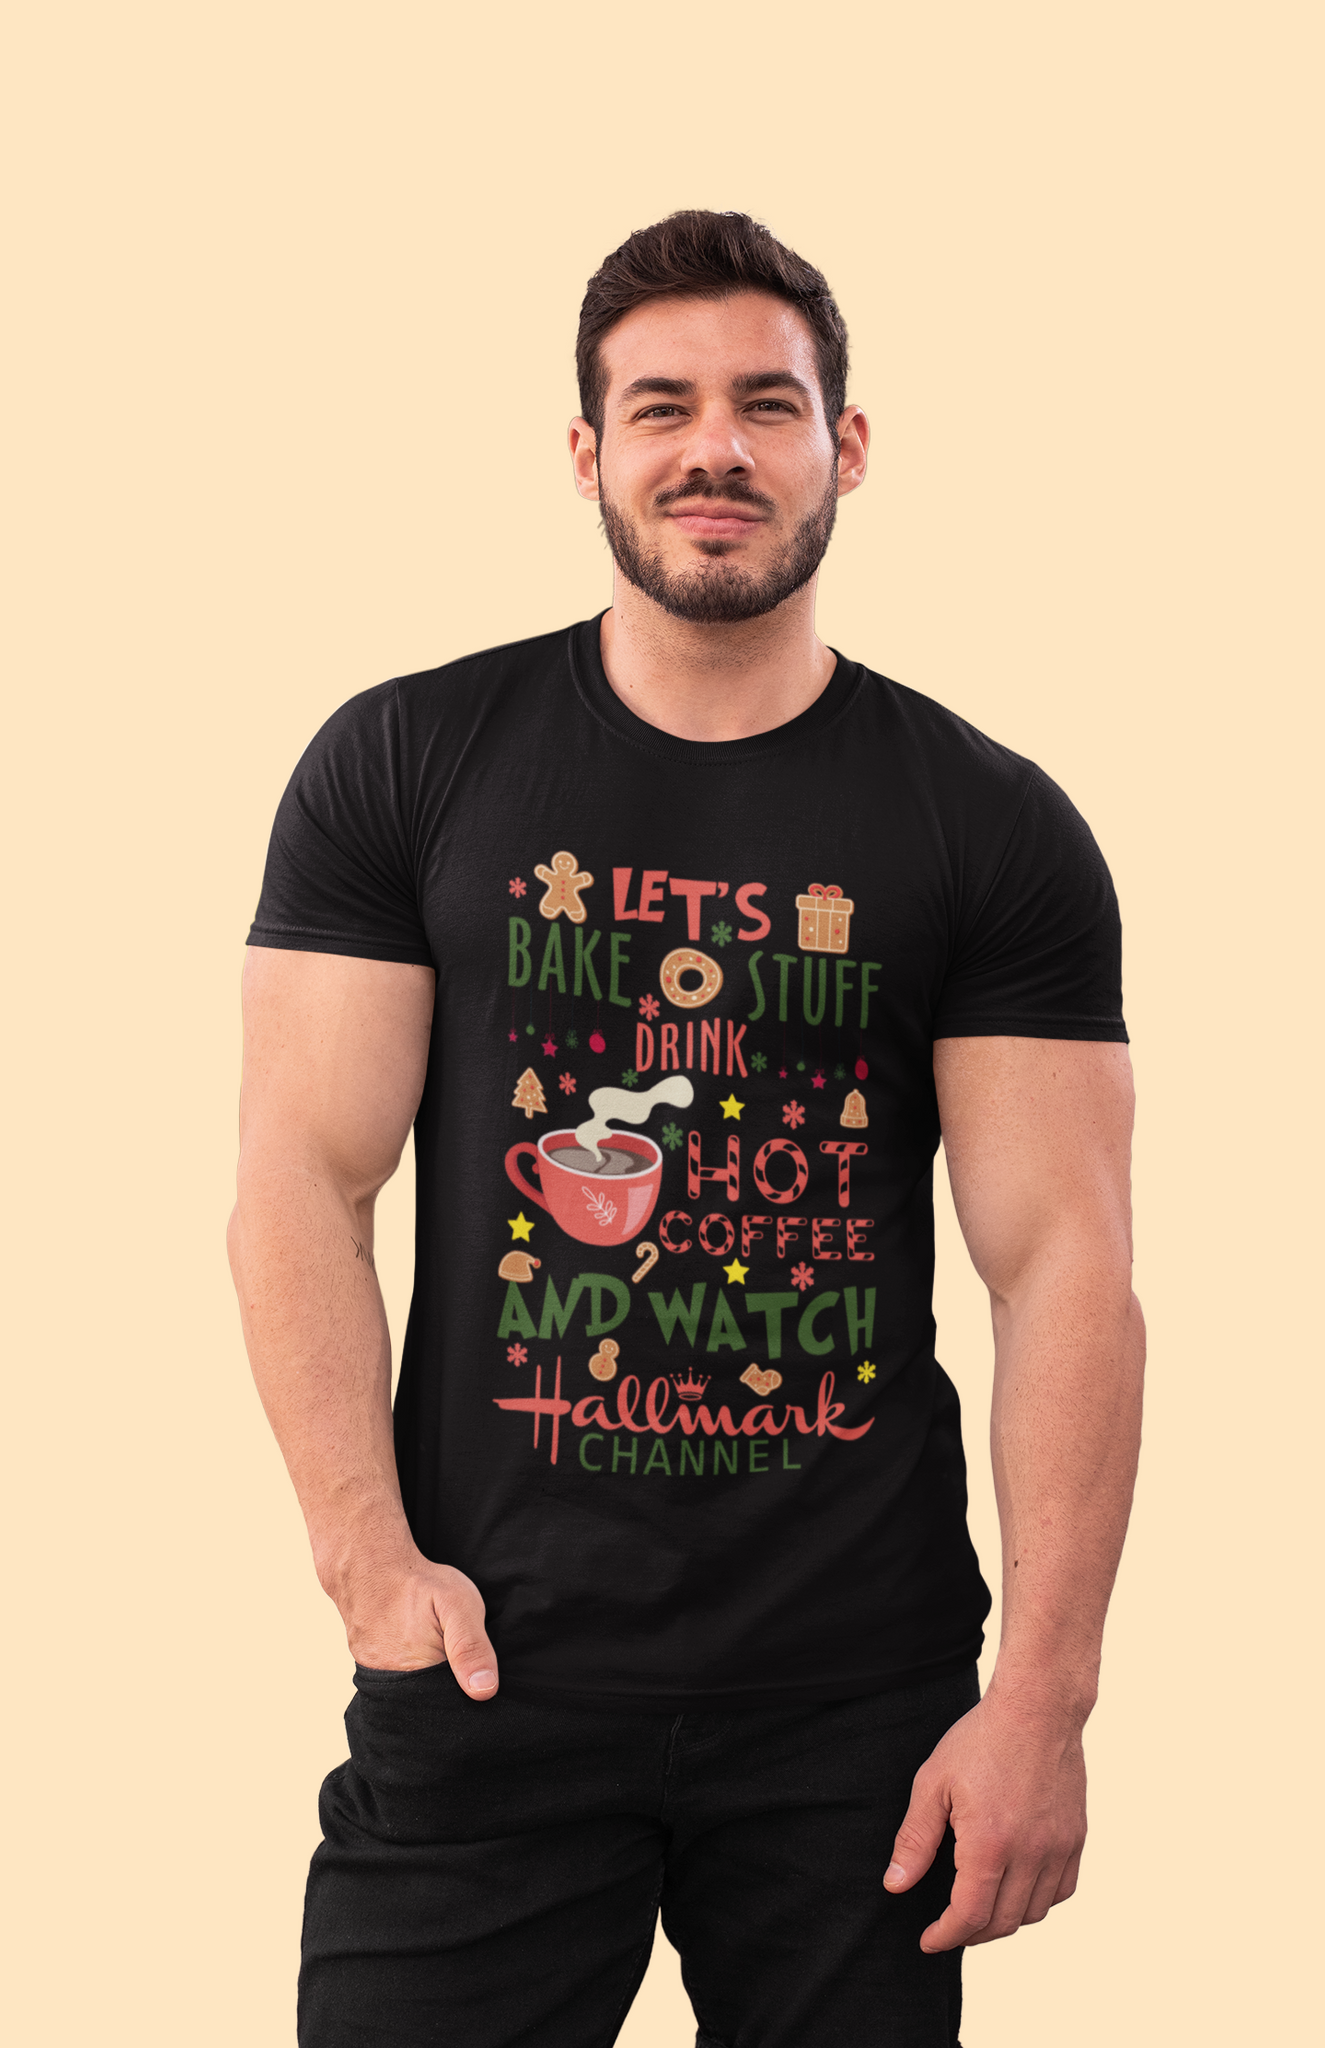 Hallmark Christmas Tshirt, Lets Bake Stuff Drink Hot Coffee And Watch Hallmark Channel Shirt, Christmas Gifts